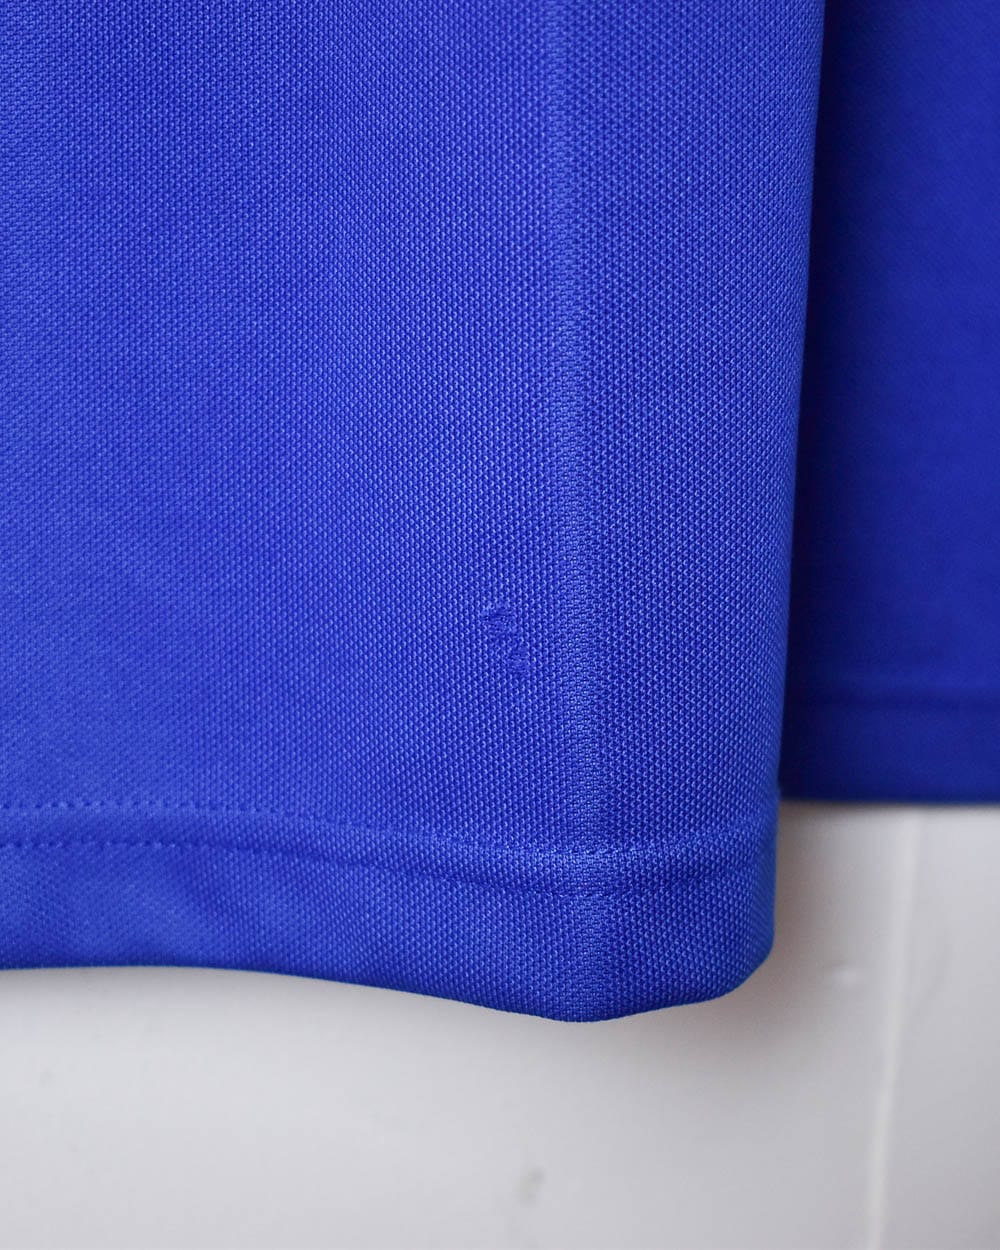 Blue Adidas Polo Shirt - X-Large